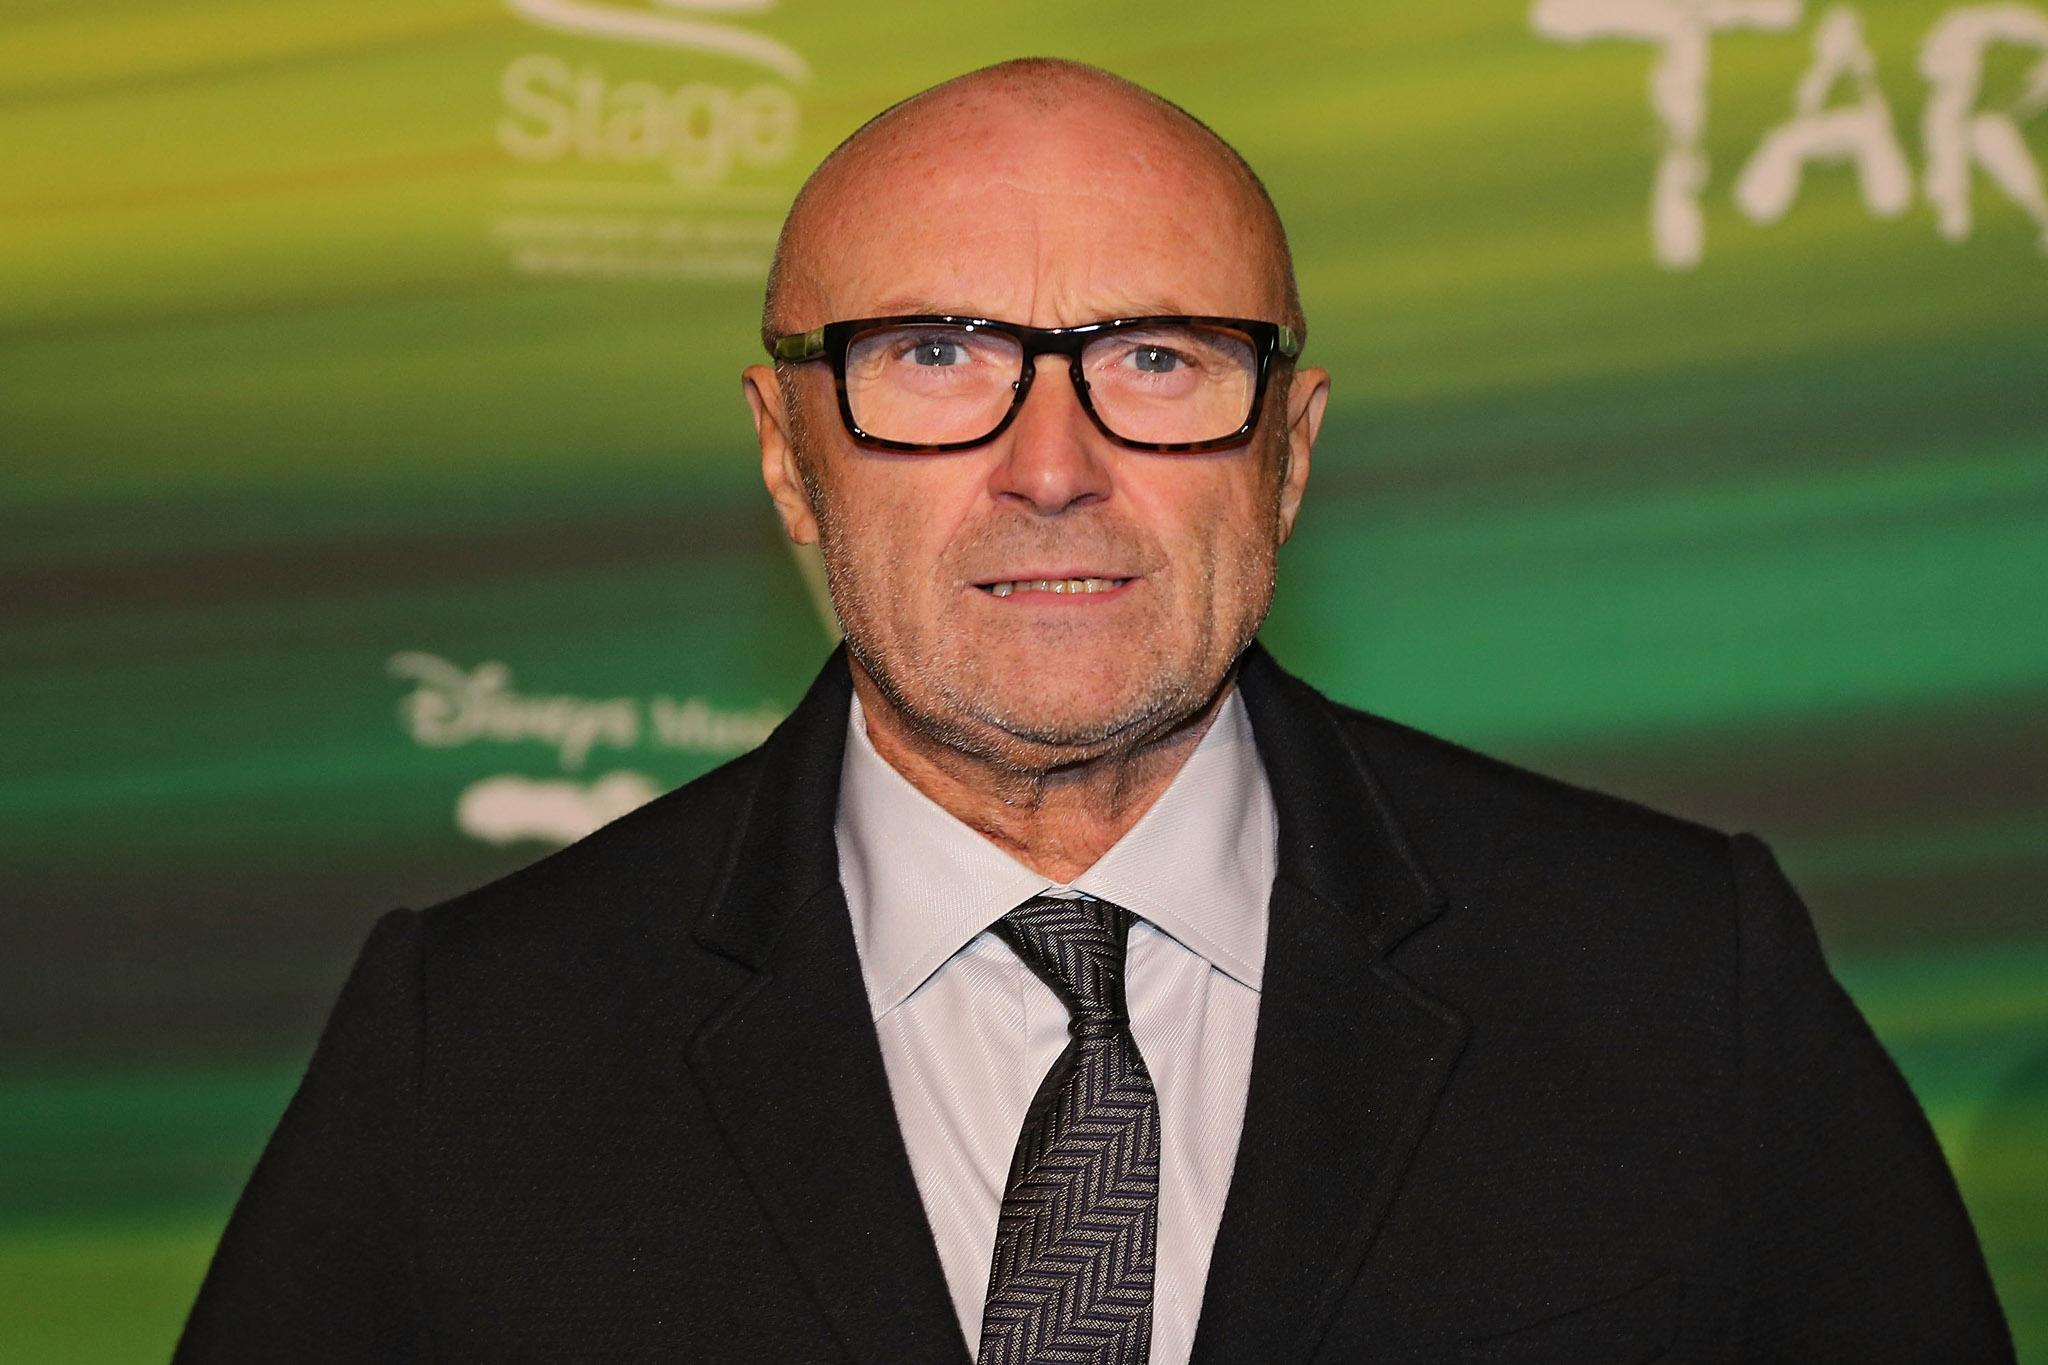 Singer and former Genesis drummer Phil Collins